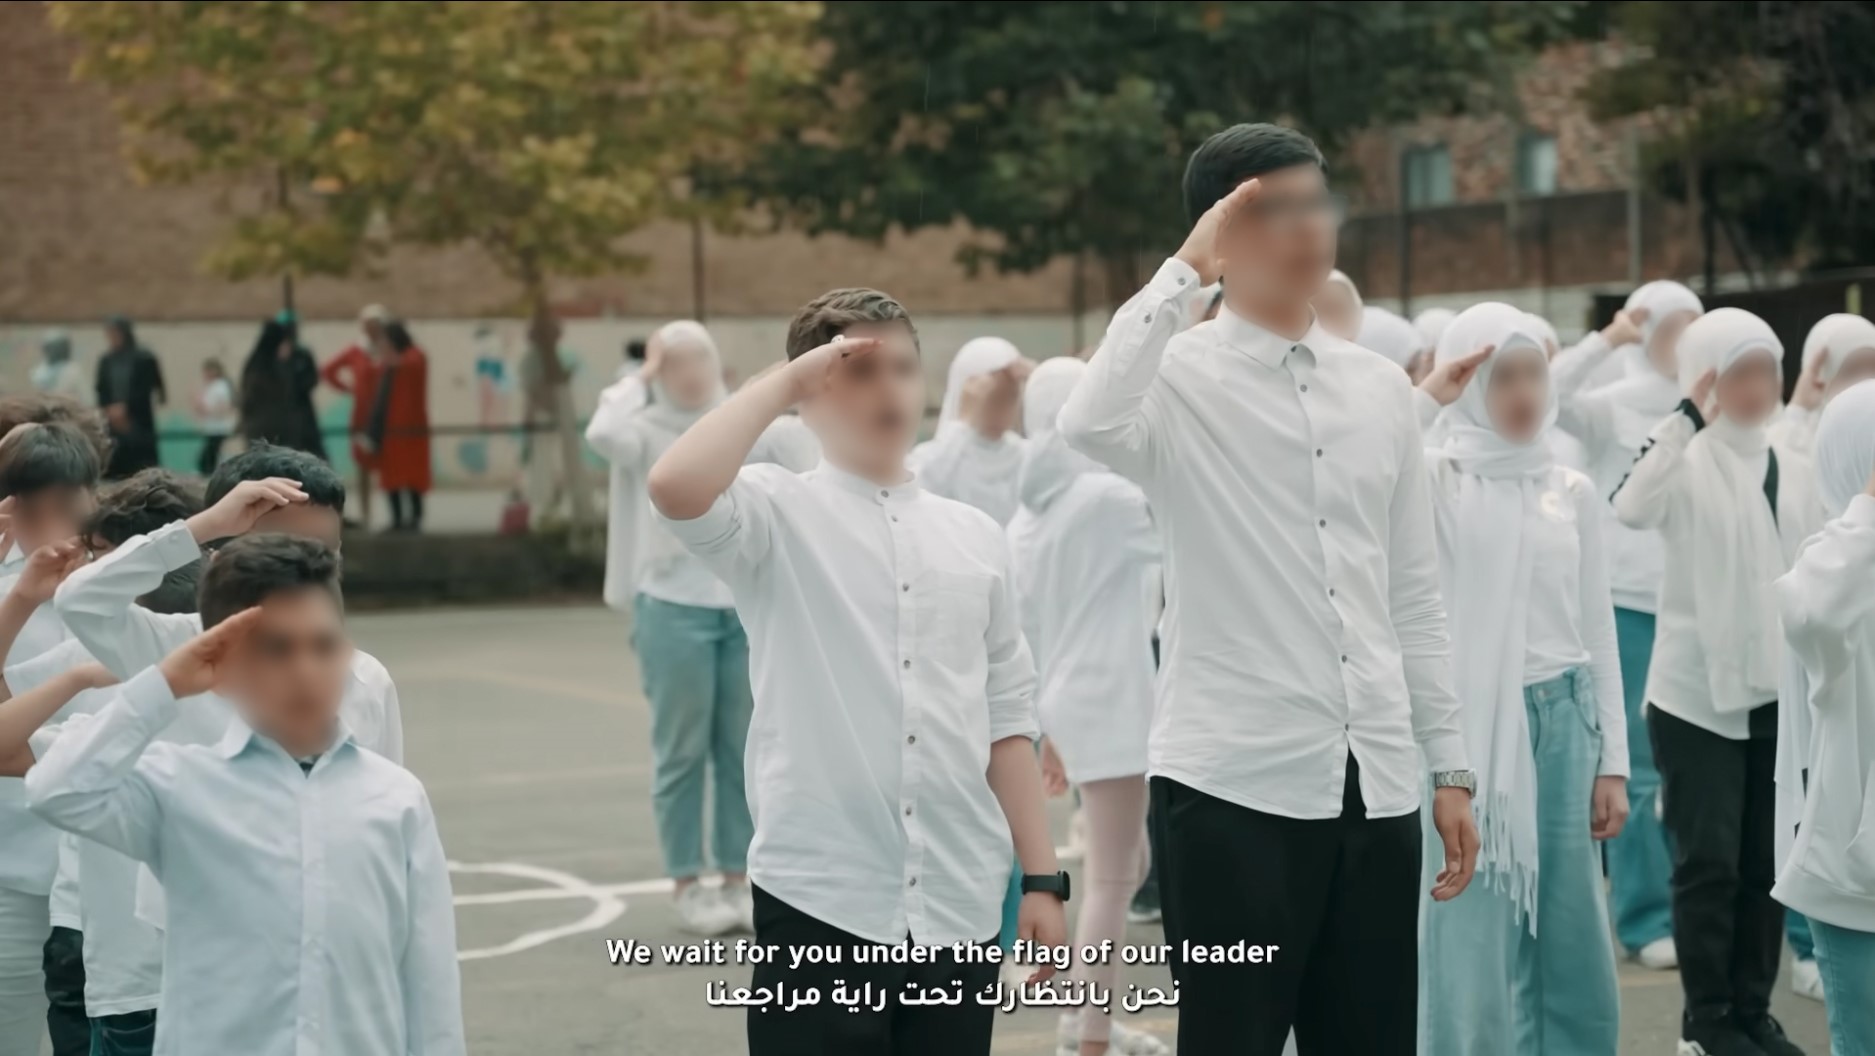 making-case-uk-proscribe-irans-irgc - Figure 4 – In the same video, children are shown pledging allegiance to Iran’s supreme leader